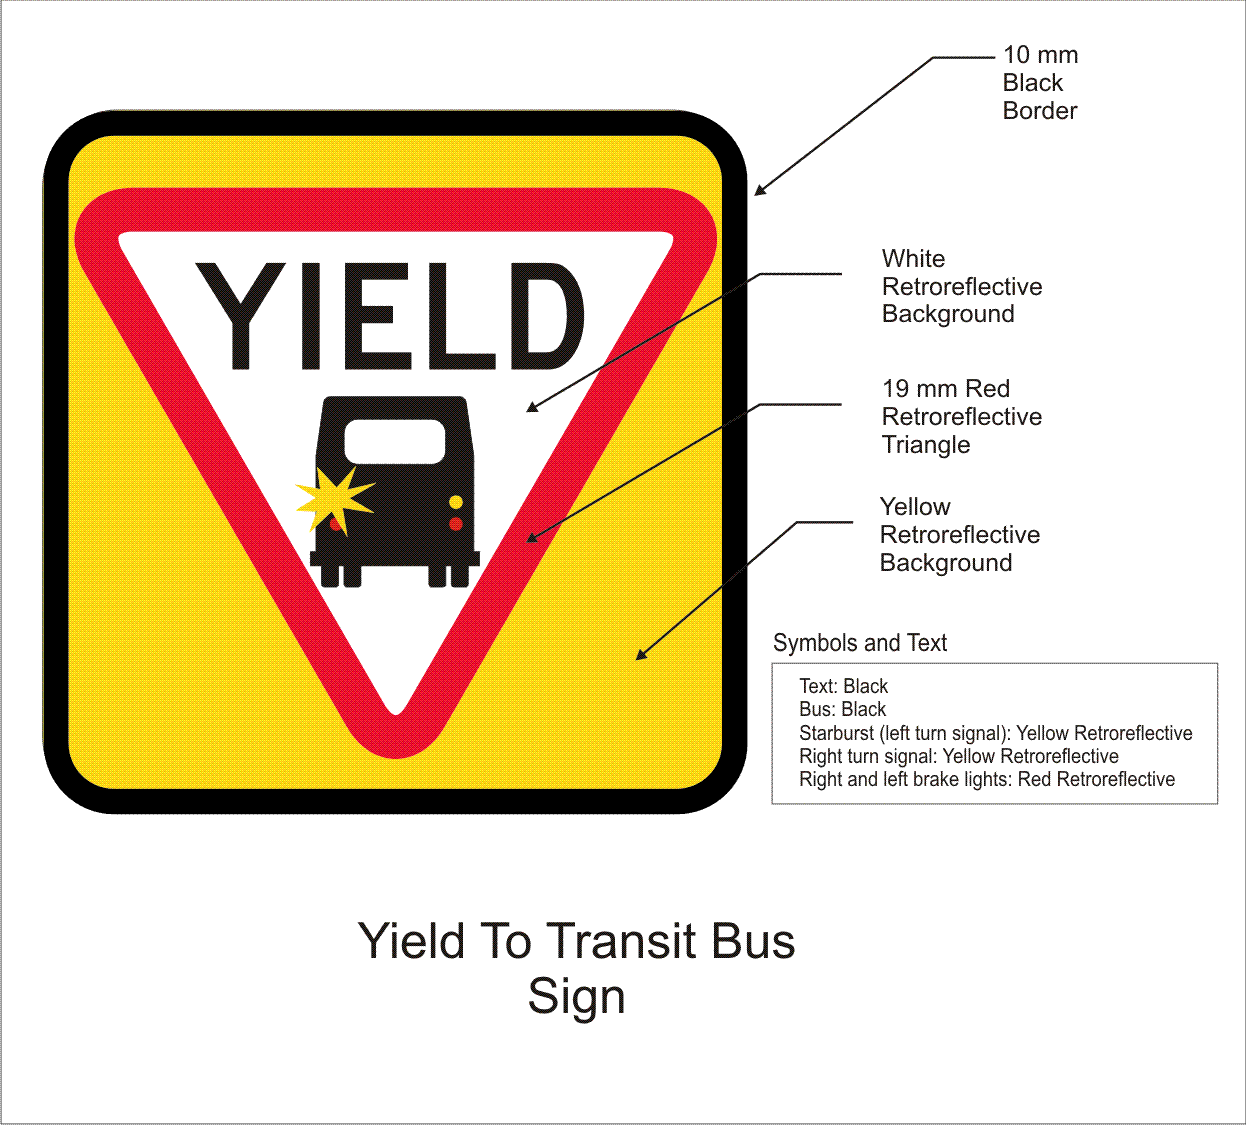 Yield To Transit Buses Regulations Motor Vehicle Act Nova Scotia